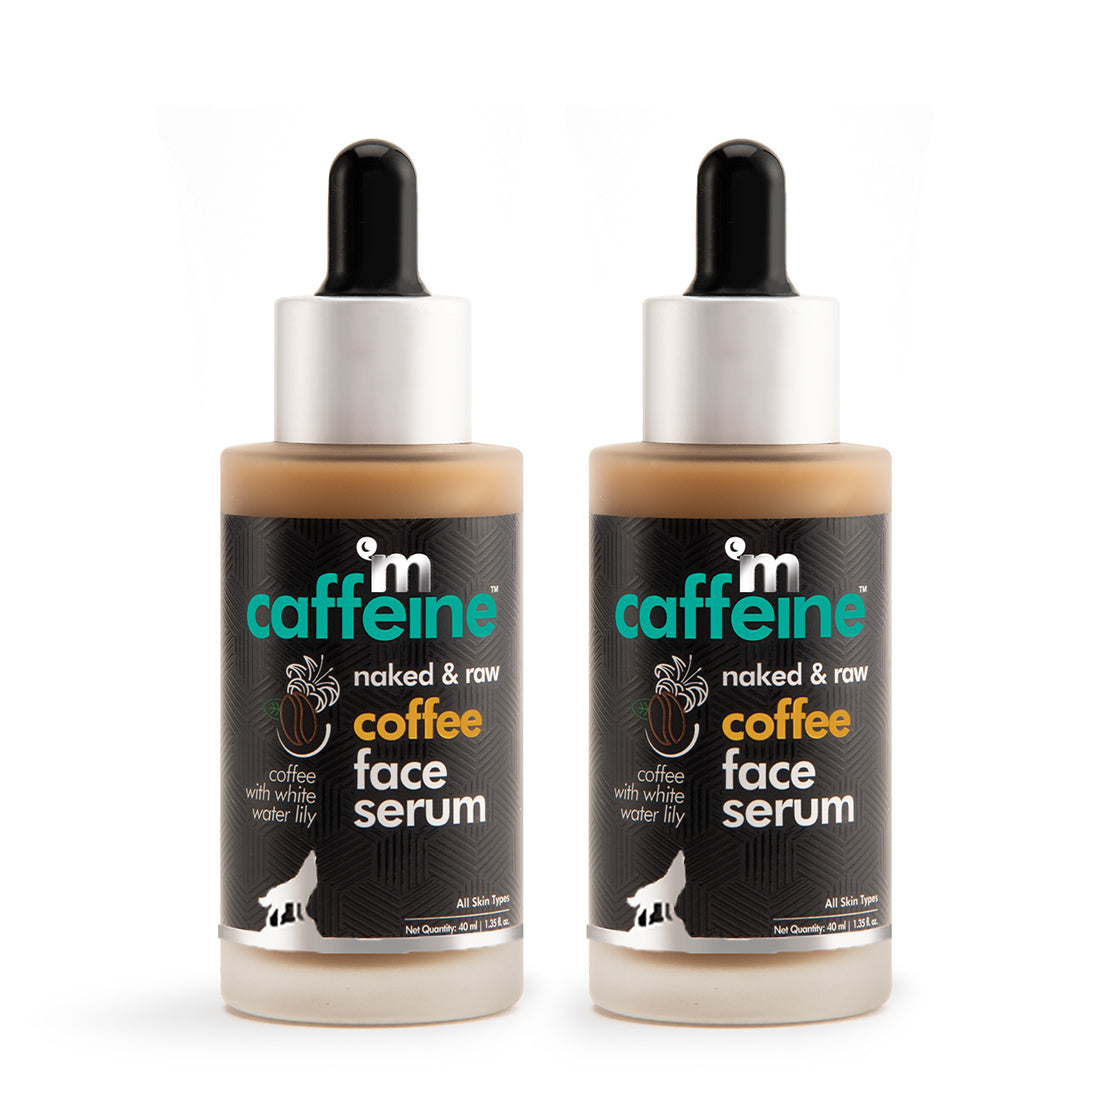 mCaffeine Coffee Face Serum